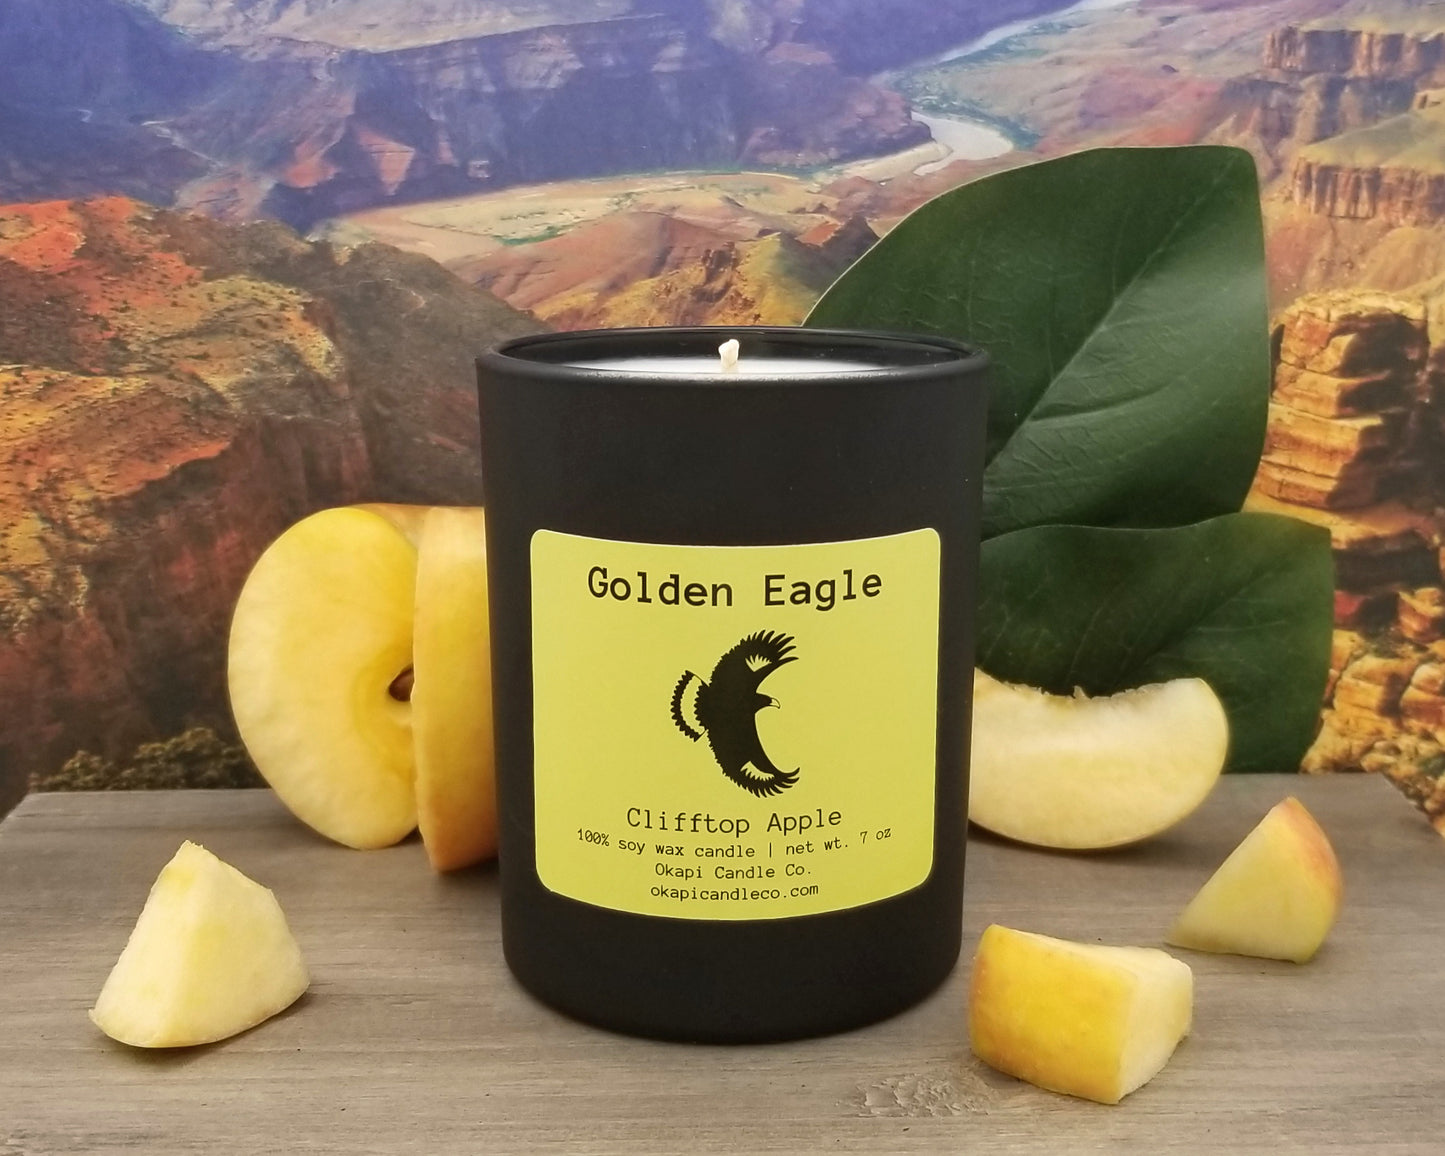 Golden Eagle Soy Candle - Clifftop Apple Fragrance